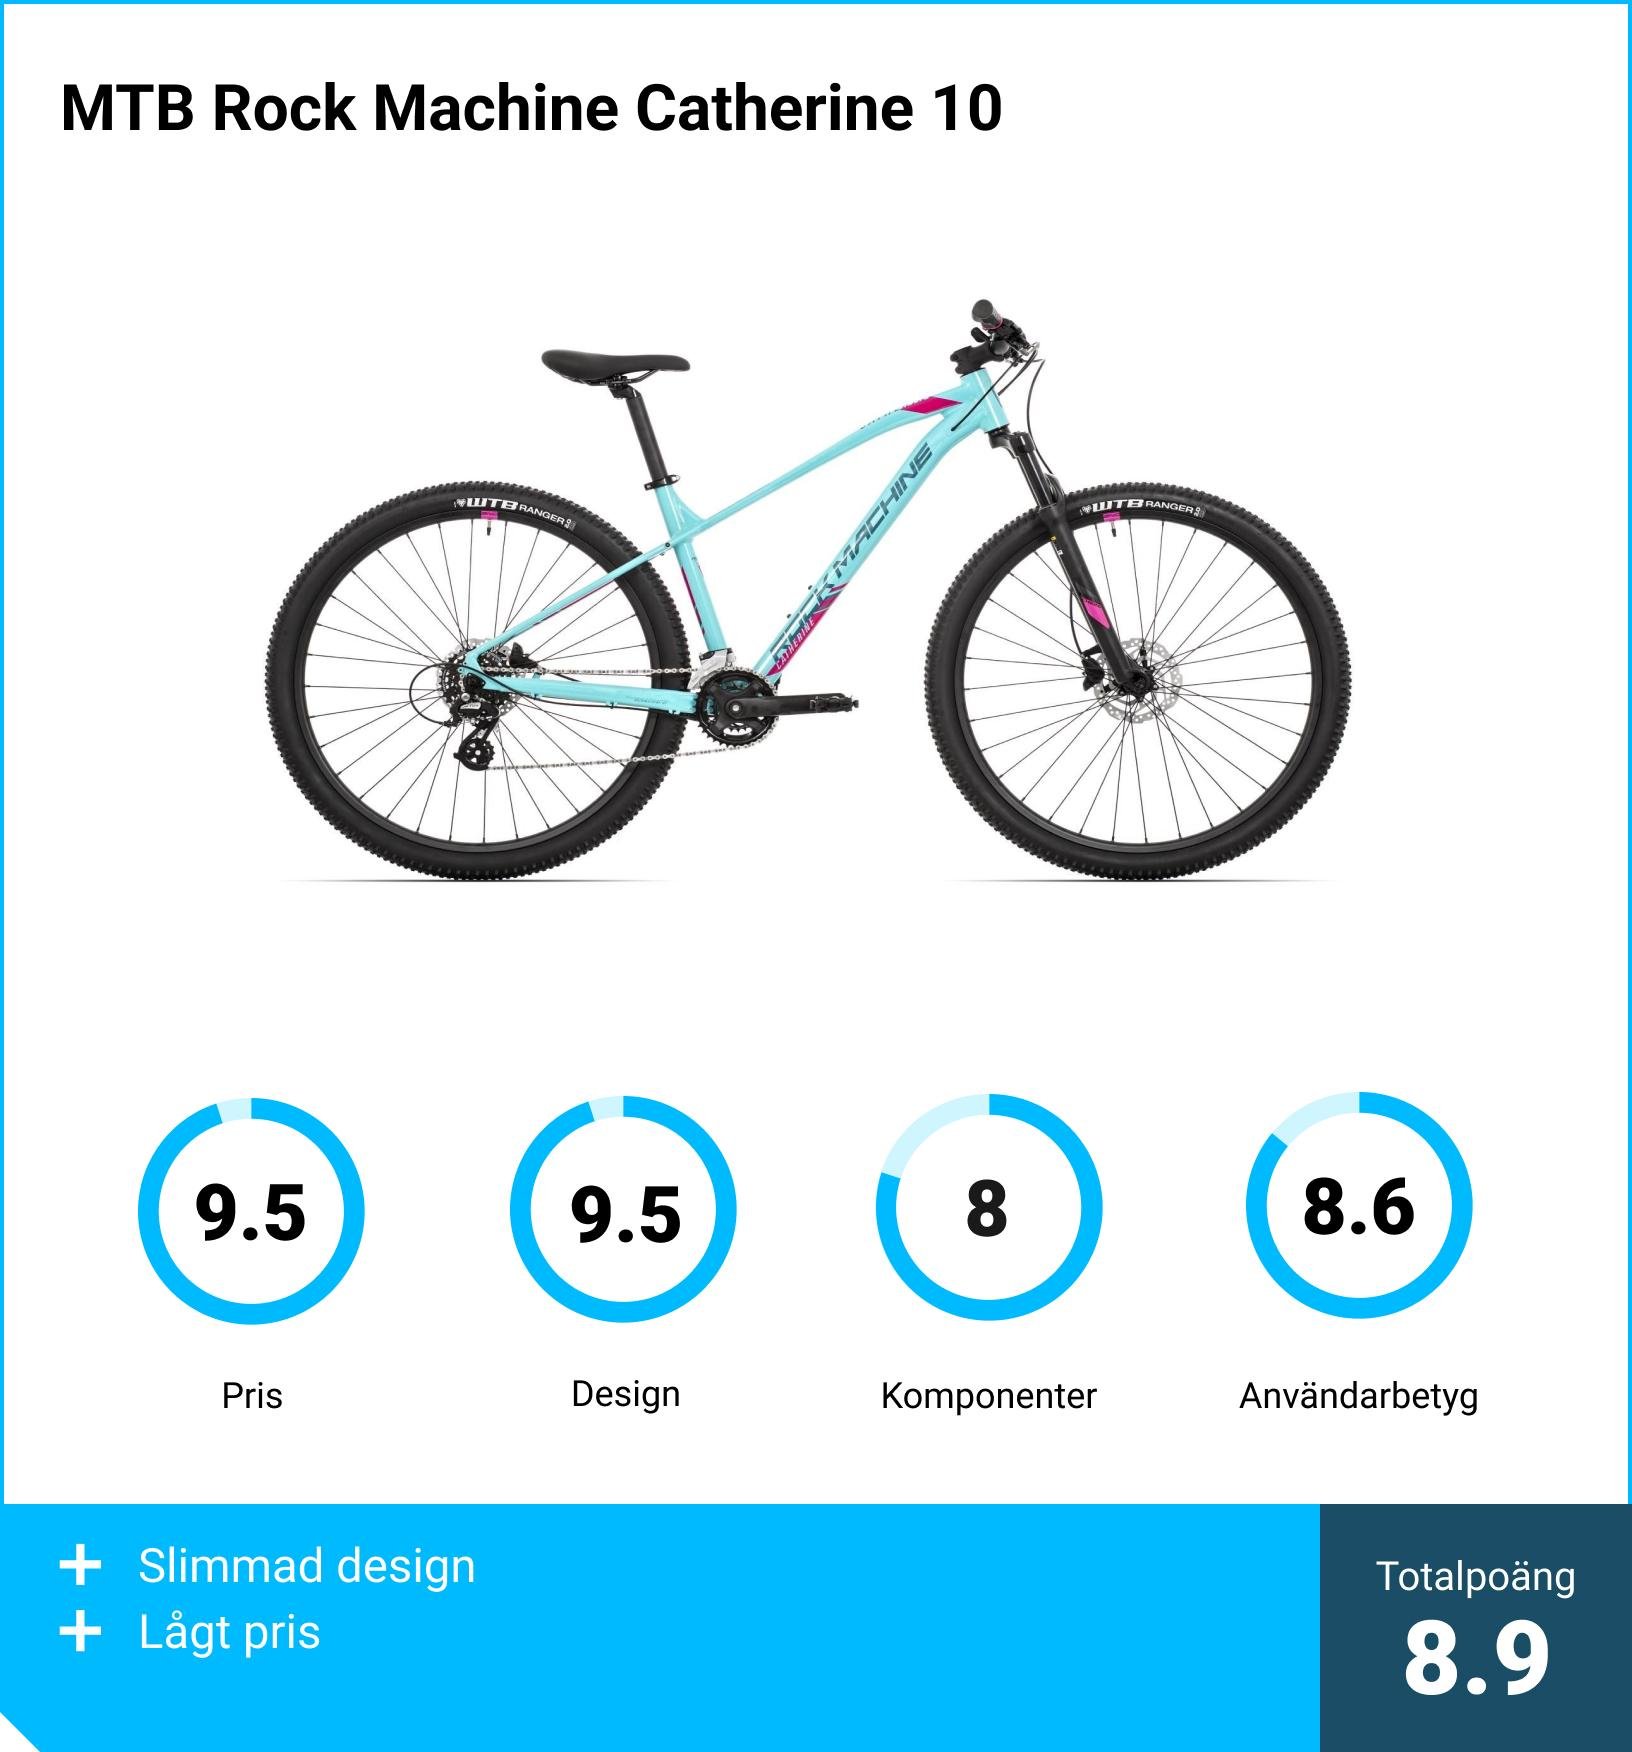 Mountanbike dam bäst i test - MTB Rock Machine Catherine 10